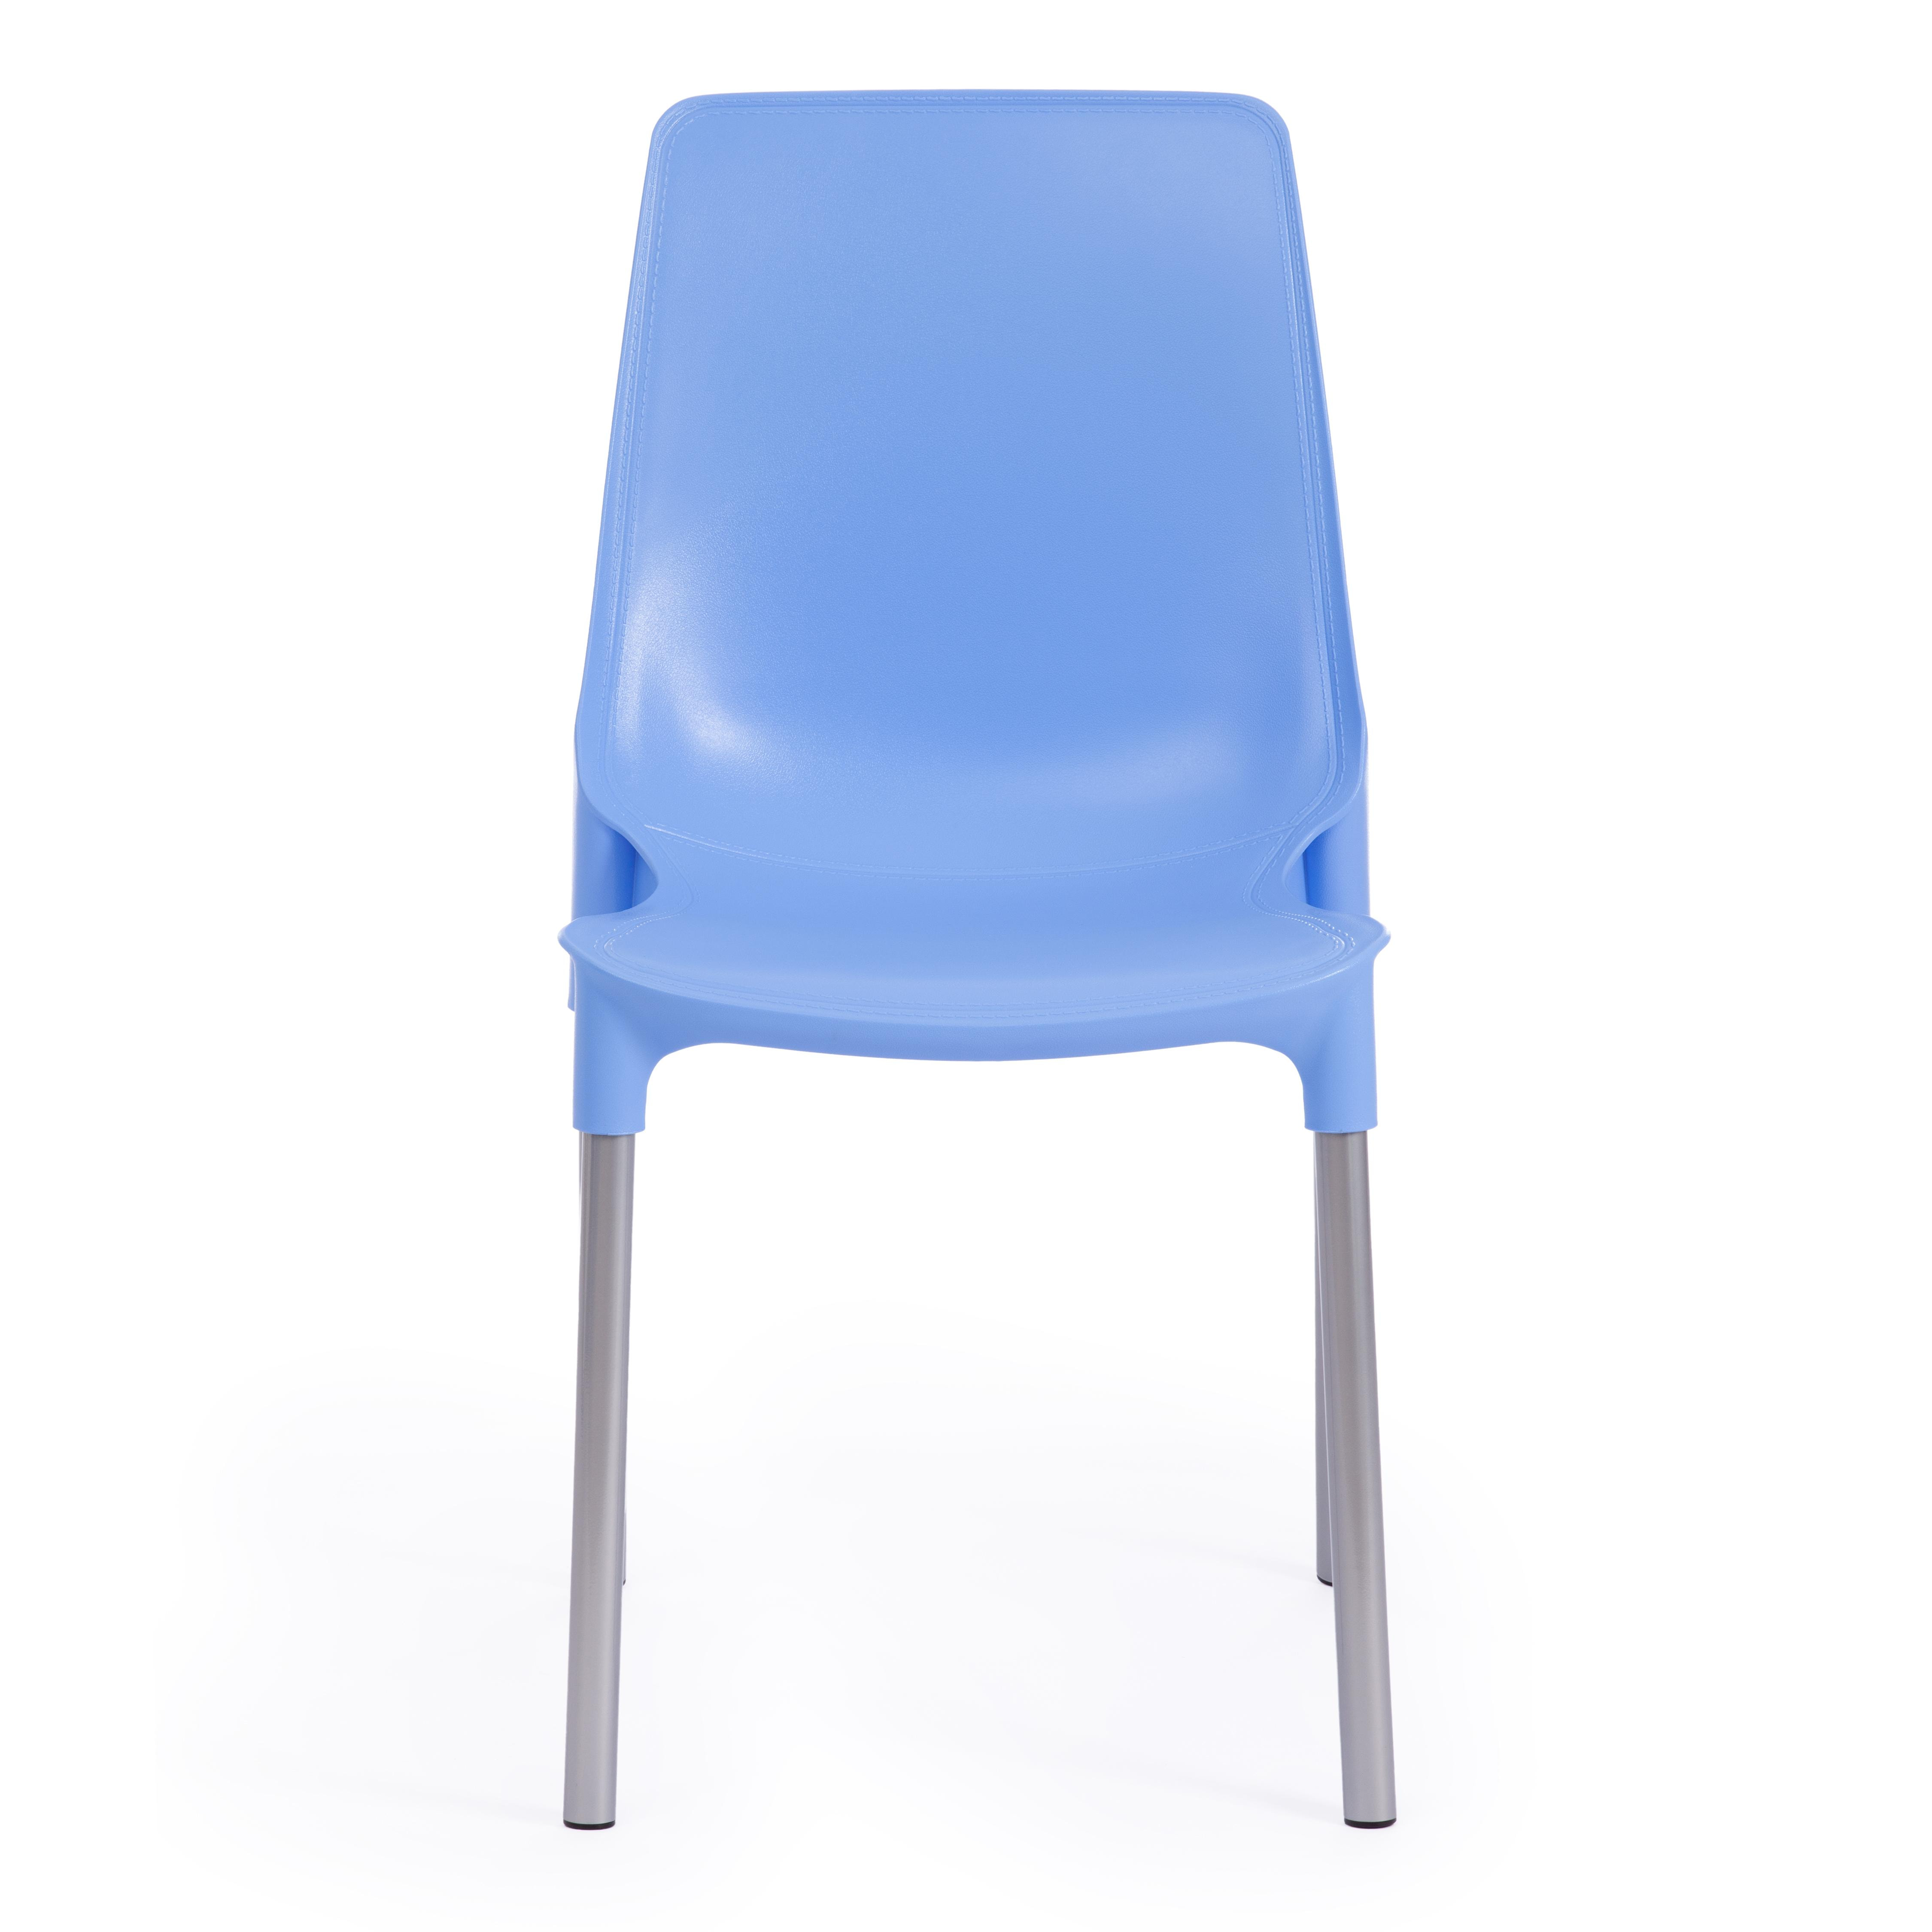 Стул GENIUS (mod 75) металл/пластик, 46x56x84cм, голубой/ножки хром